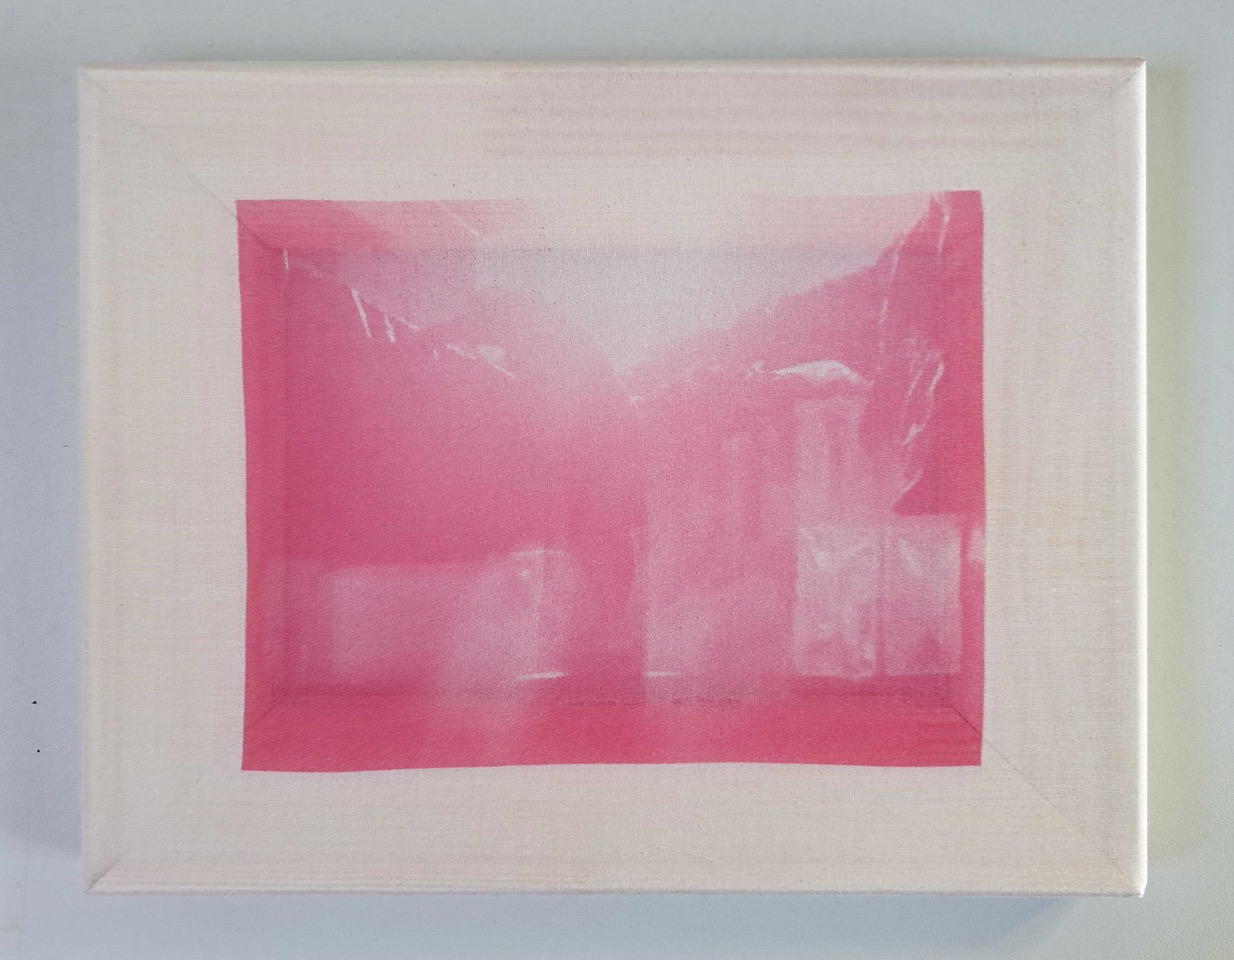 Filmstill from the film Es balok in pink on silk on wooden stretcher